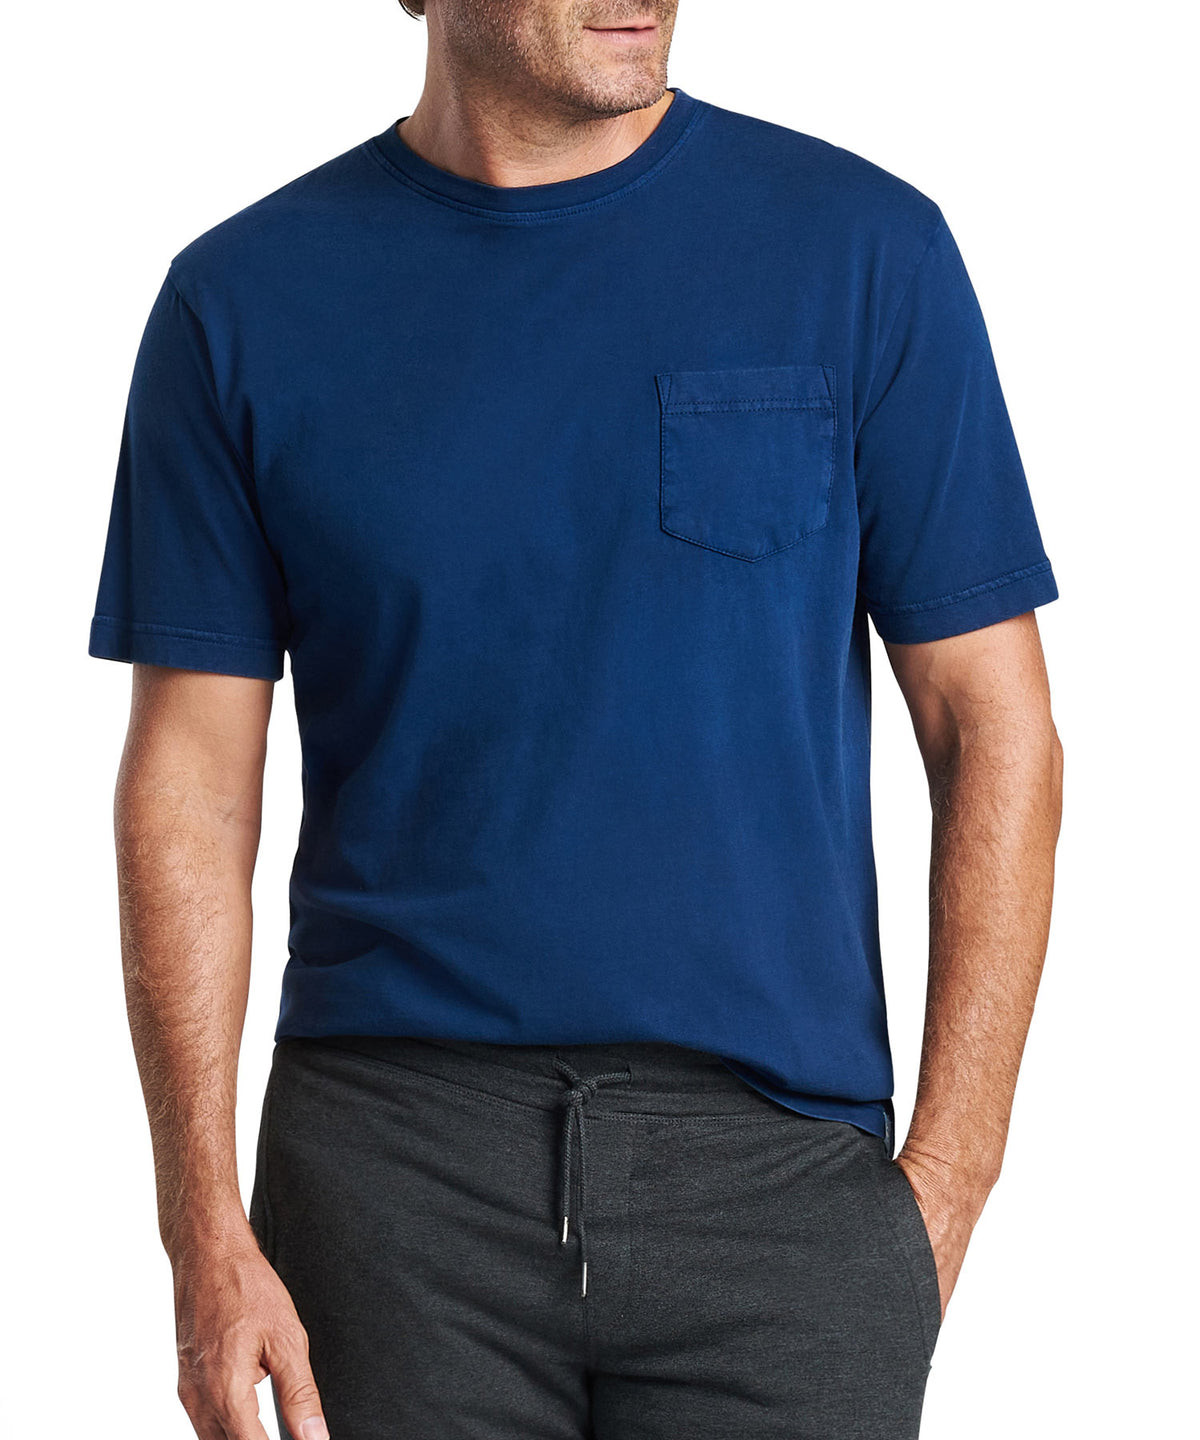 Maglietta con tasca Lava Wash di Peter Millar, Men's Big & Tall